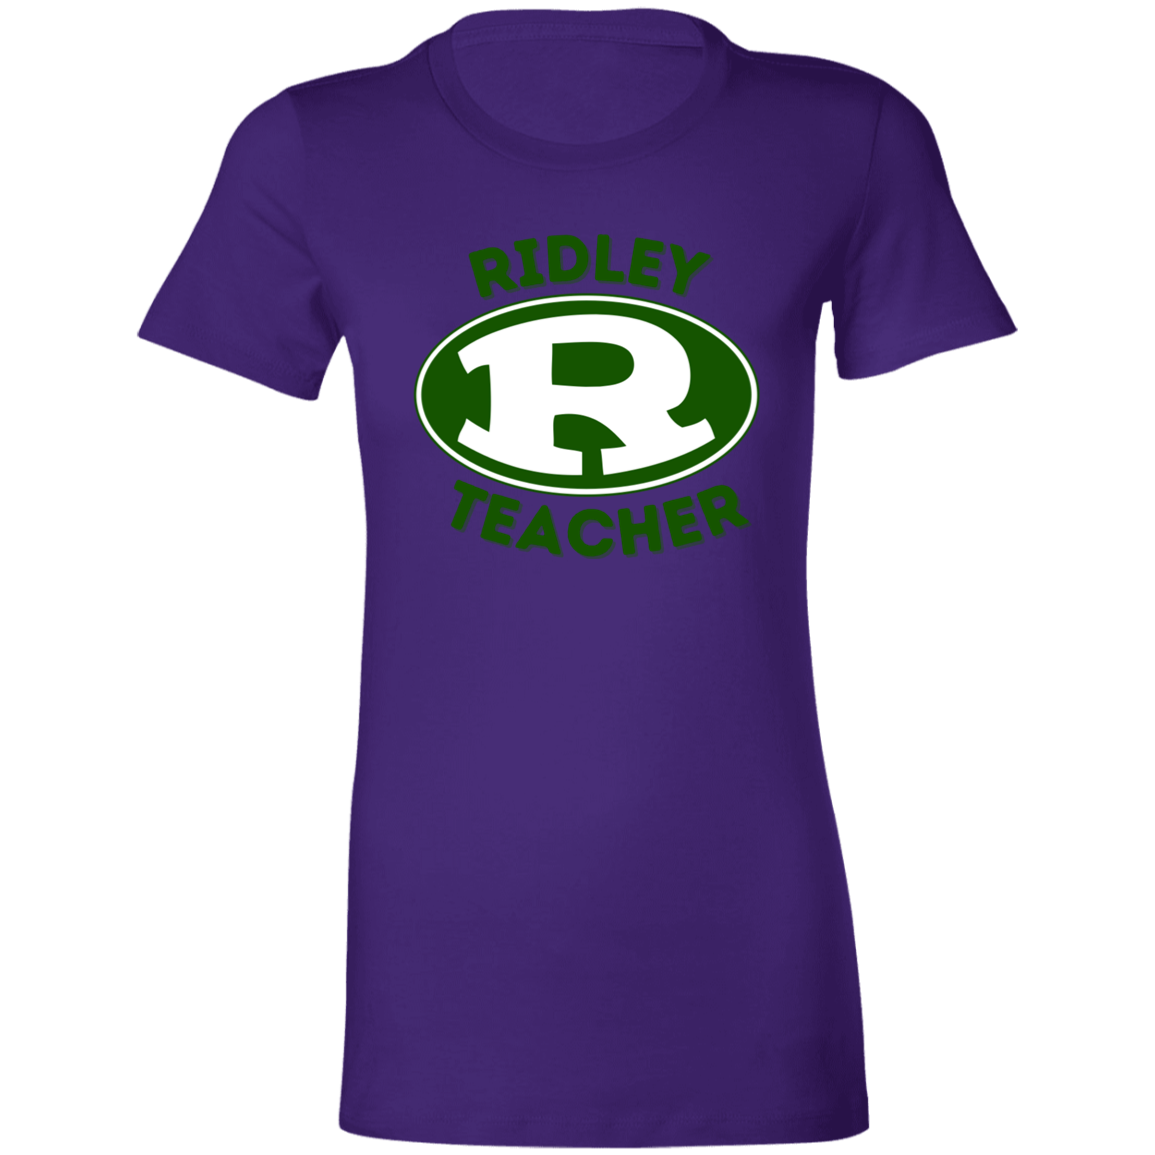 RTeacher TeamStore Ladies' Favorite T-Shirt